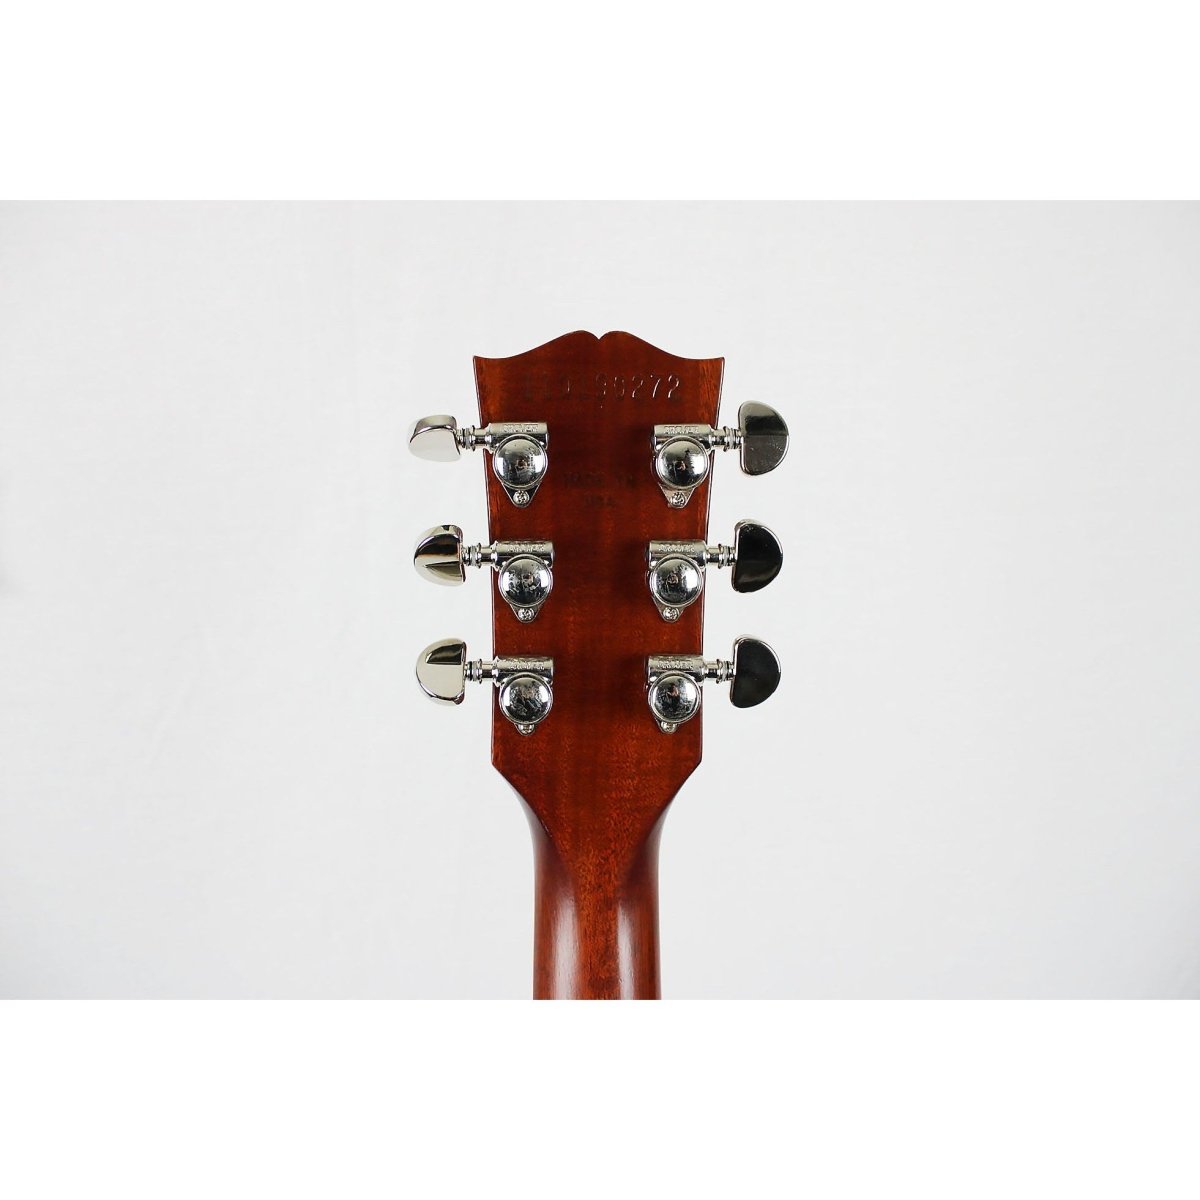 2019 Gibson Memphis ES-335 Satin - Sunset Burst *Used – Excellent* - Leitz Music--110190275